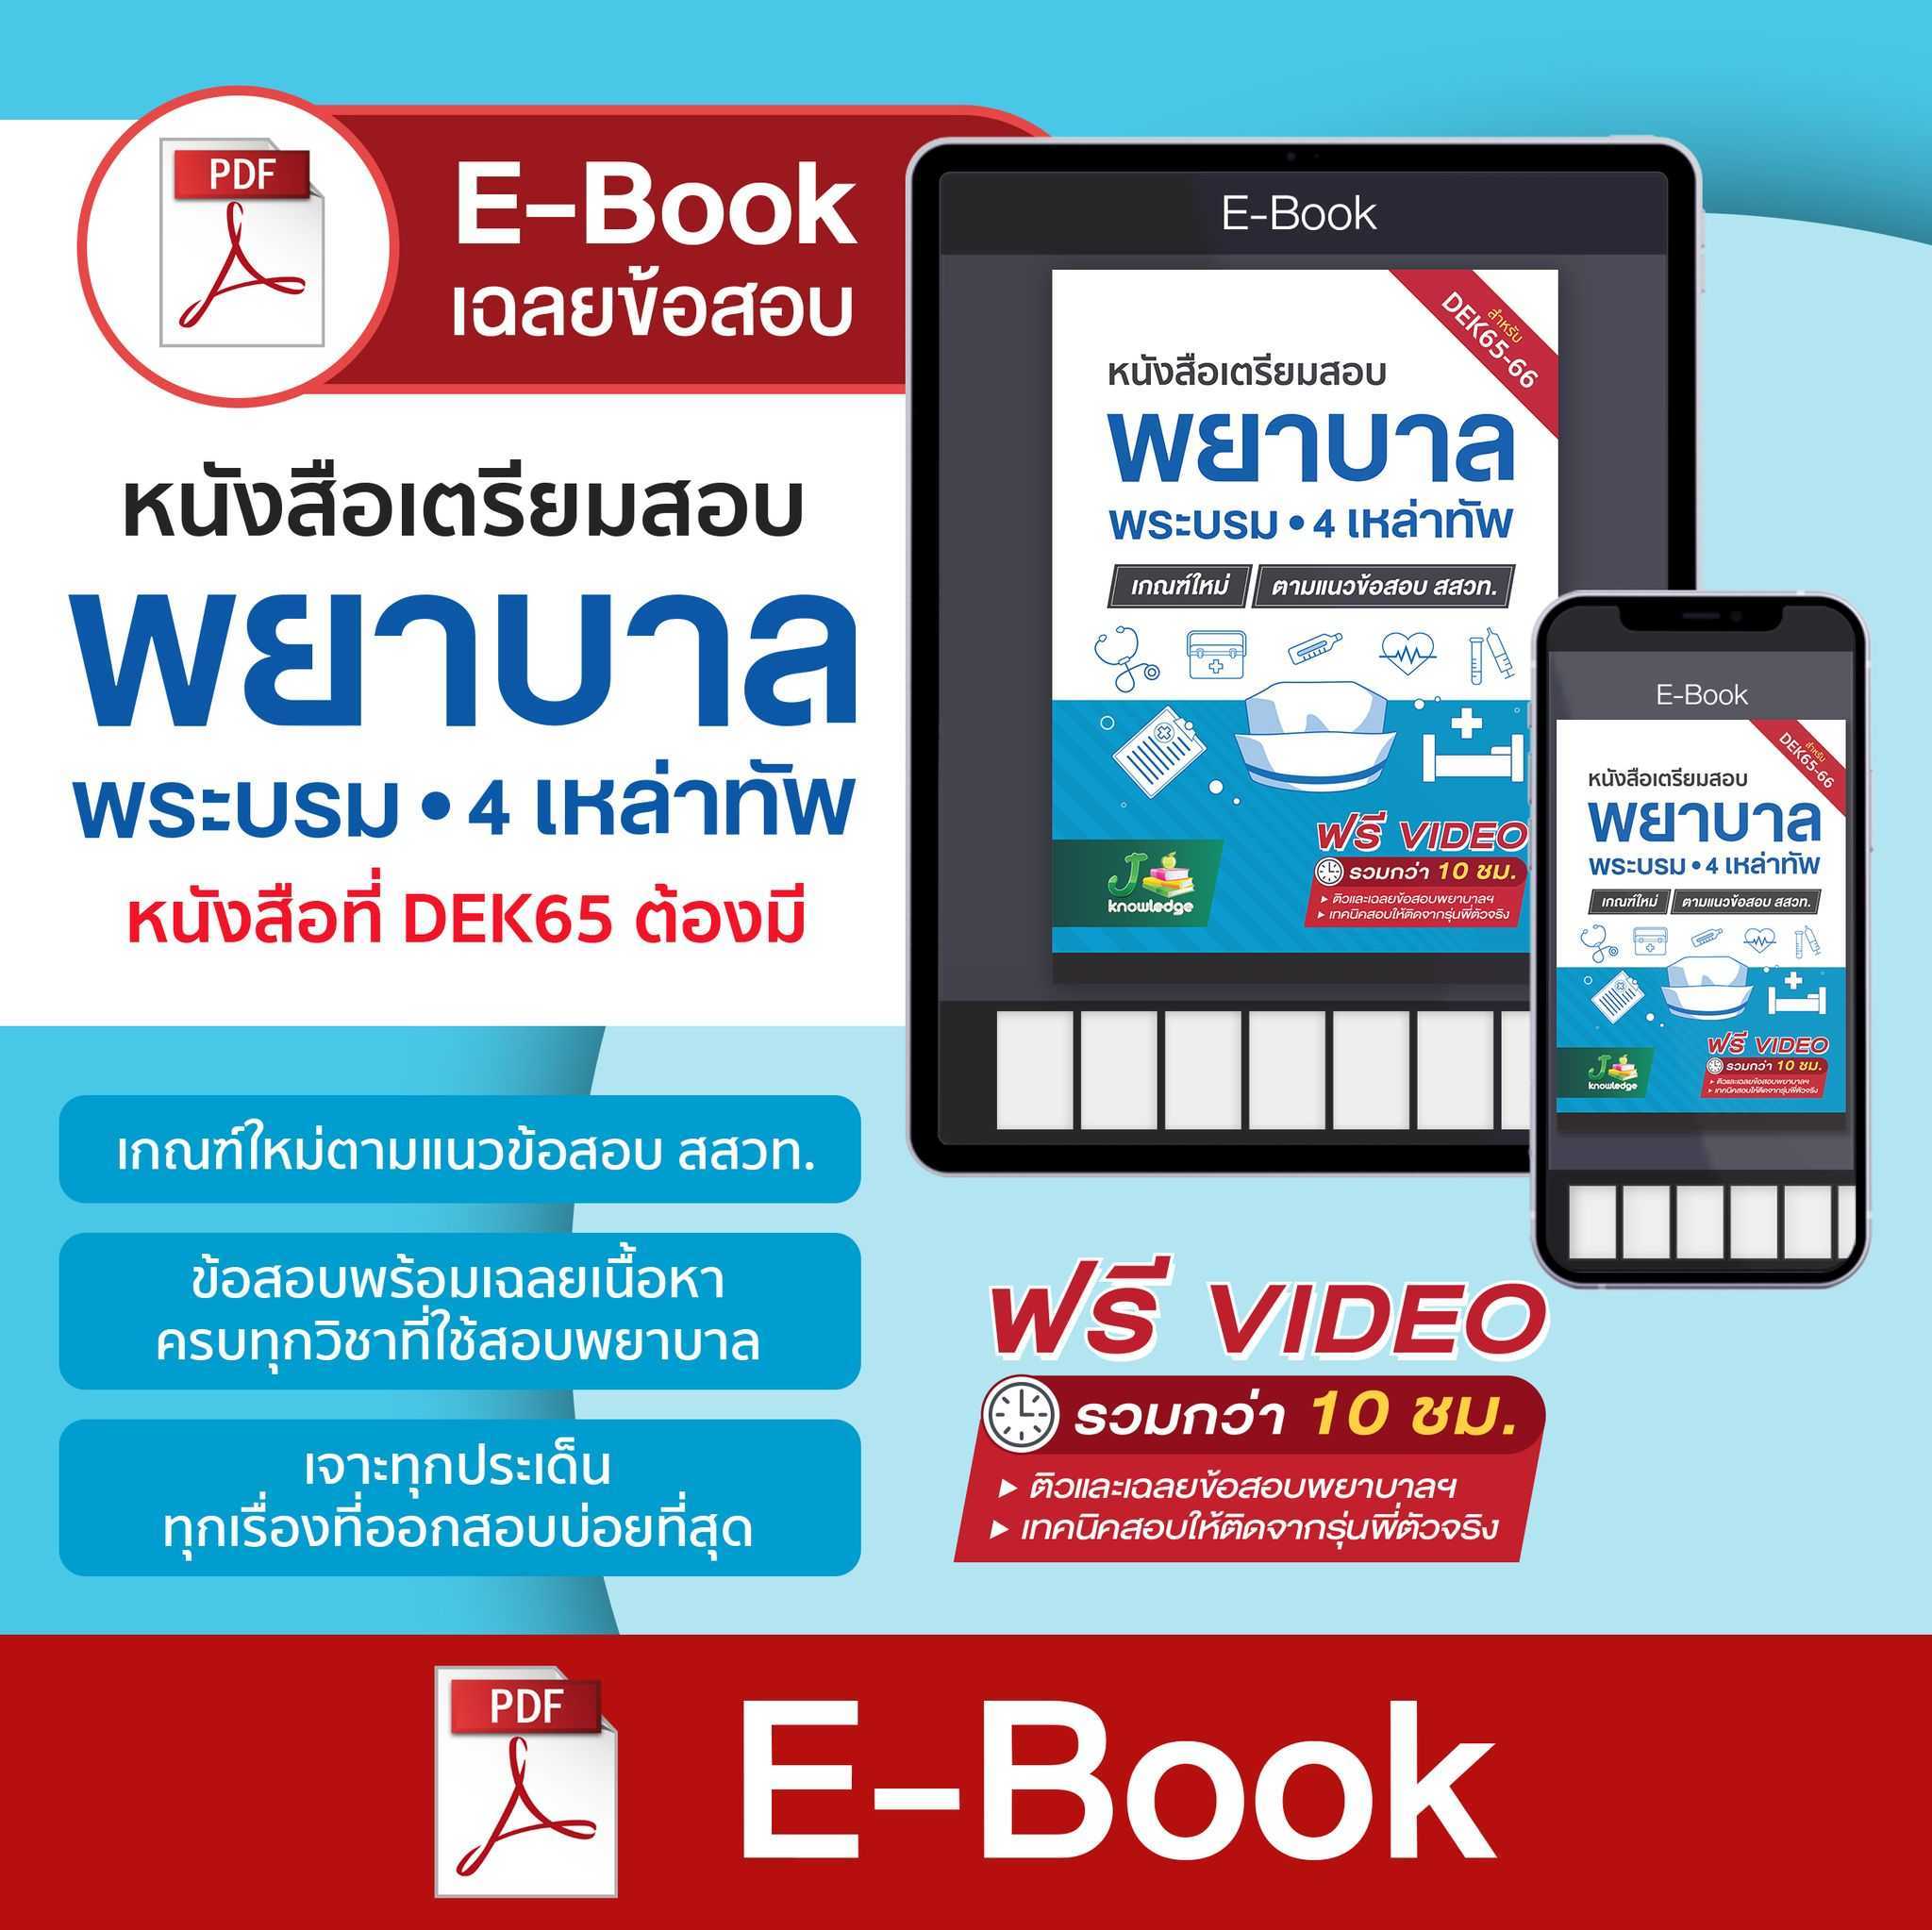 Lazada Thailand - E-Book to prepare for the royal nursing exam / 4 nurses, new criteria according to IPST, more than 10 hours of tutoring courses